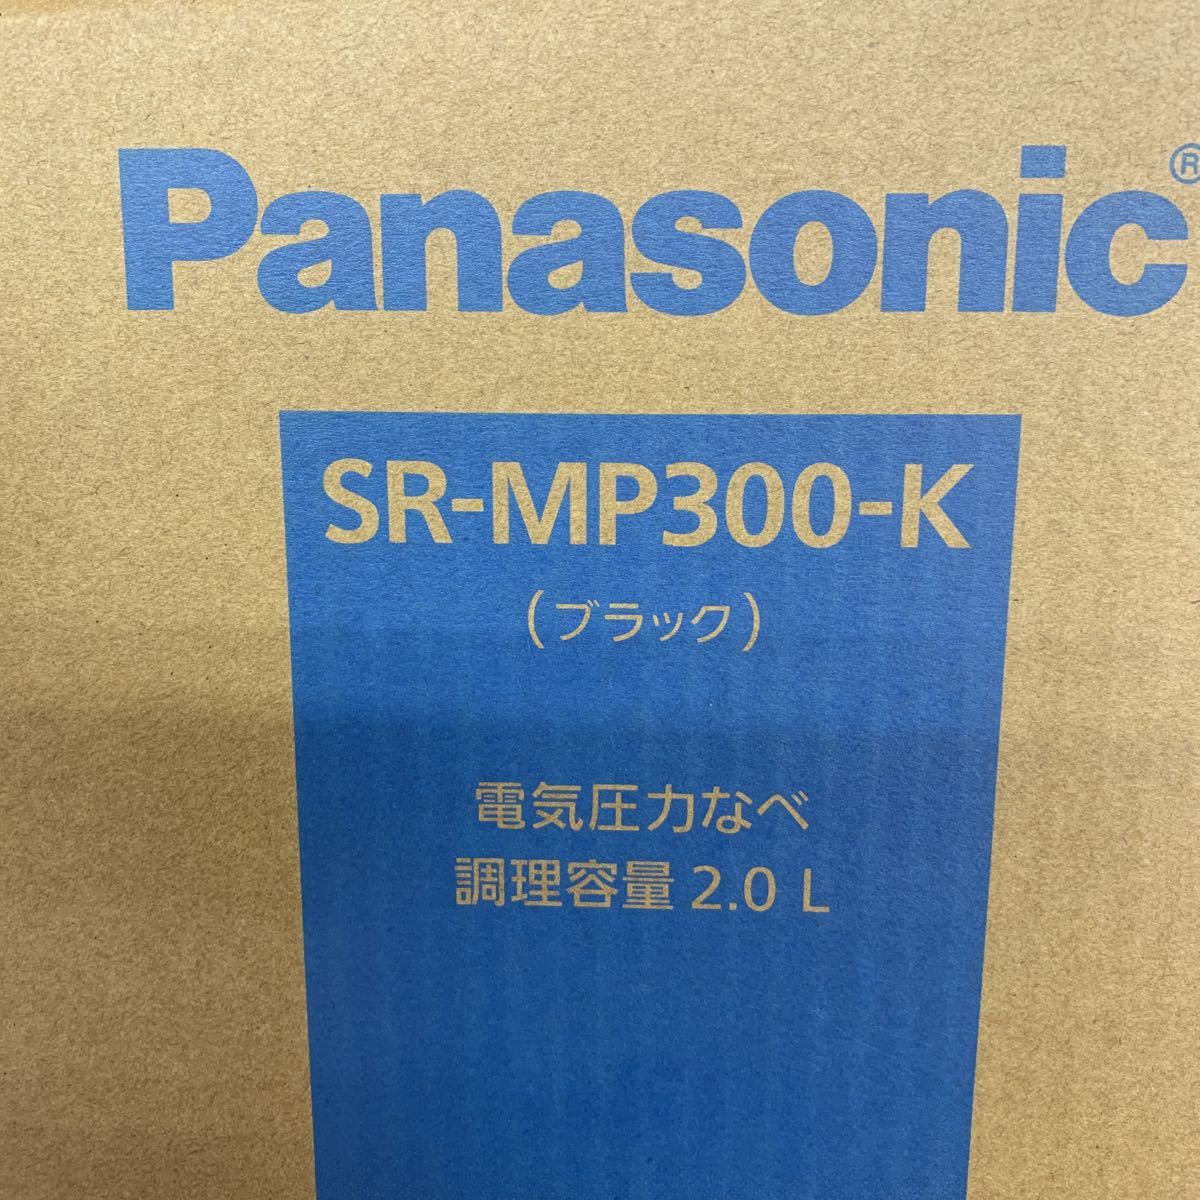  Panasonic Panasonic electric pressure cooker SR-MP300-K